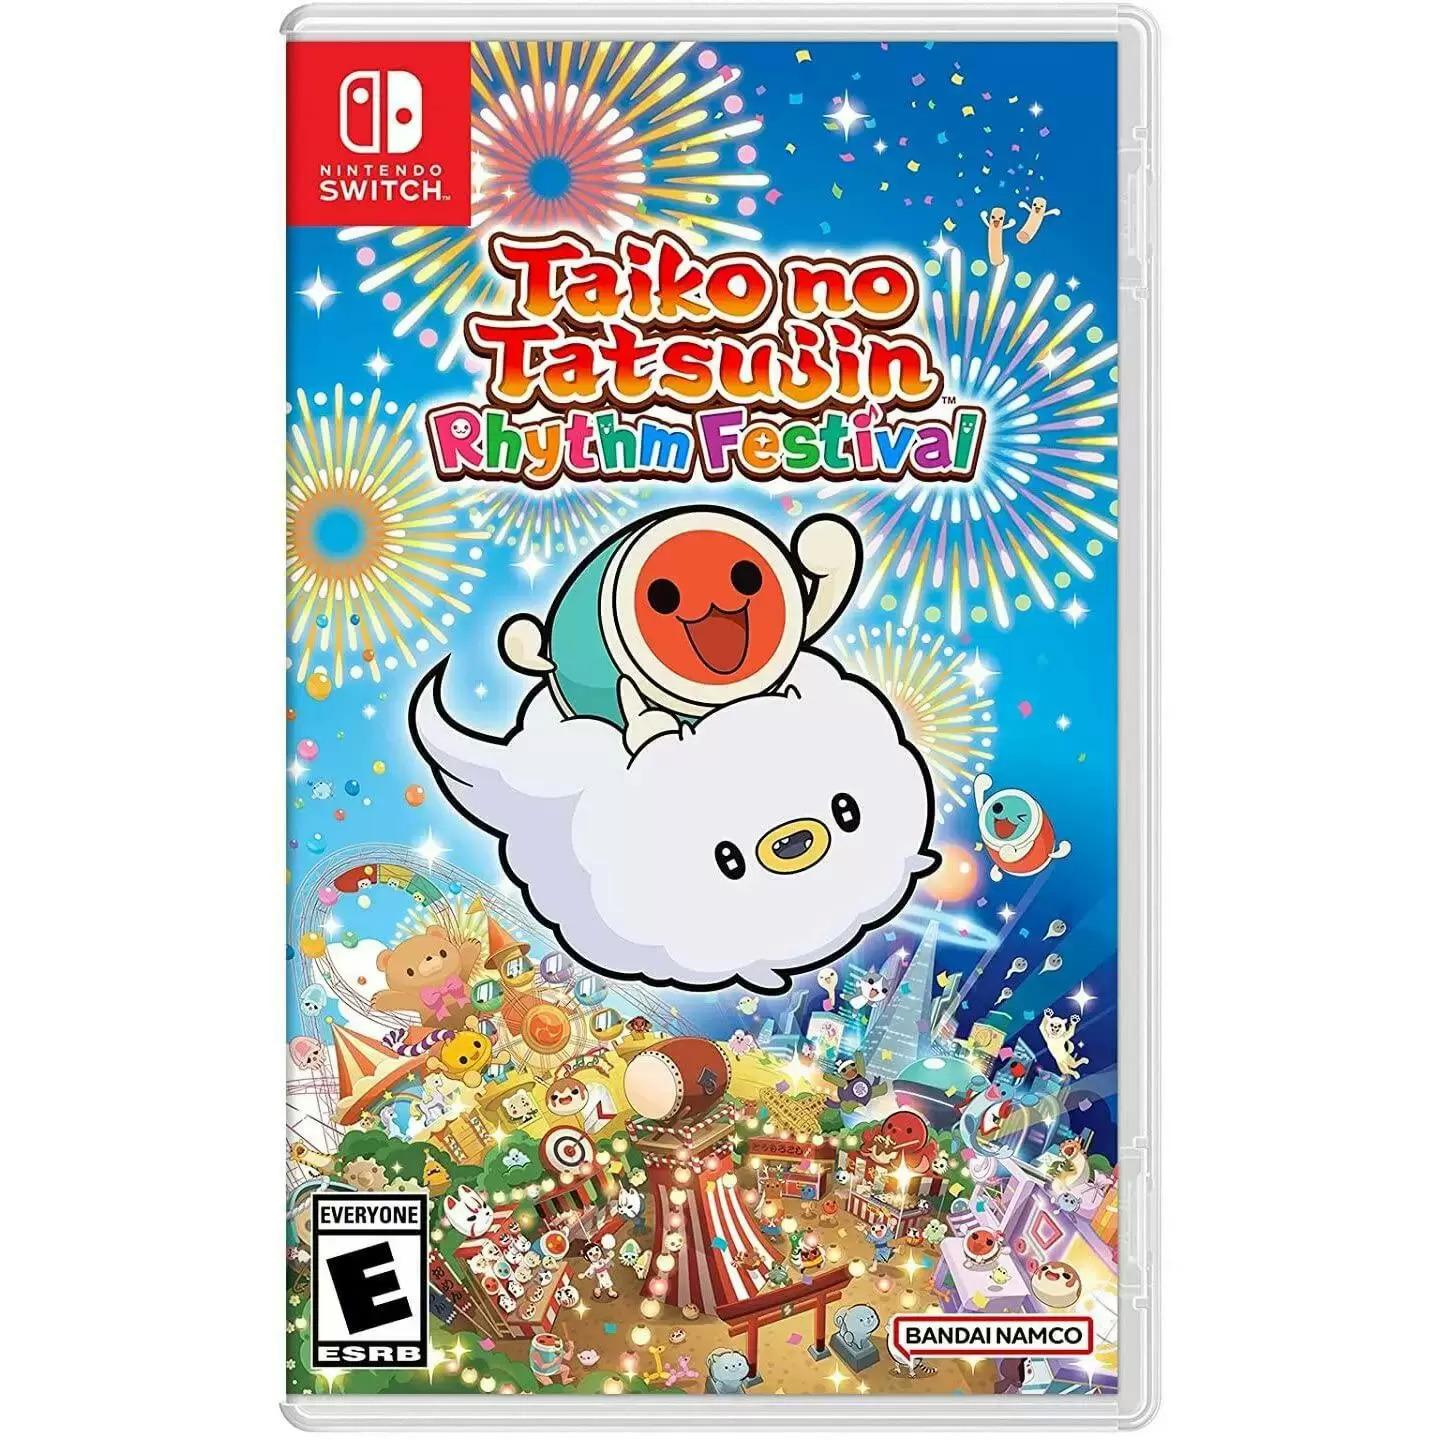 Taiko no Tatsujin Rhythm Festival Nintendo Switch for $11.99